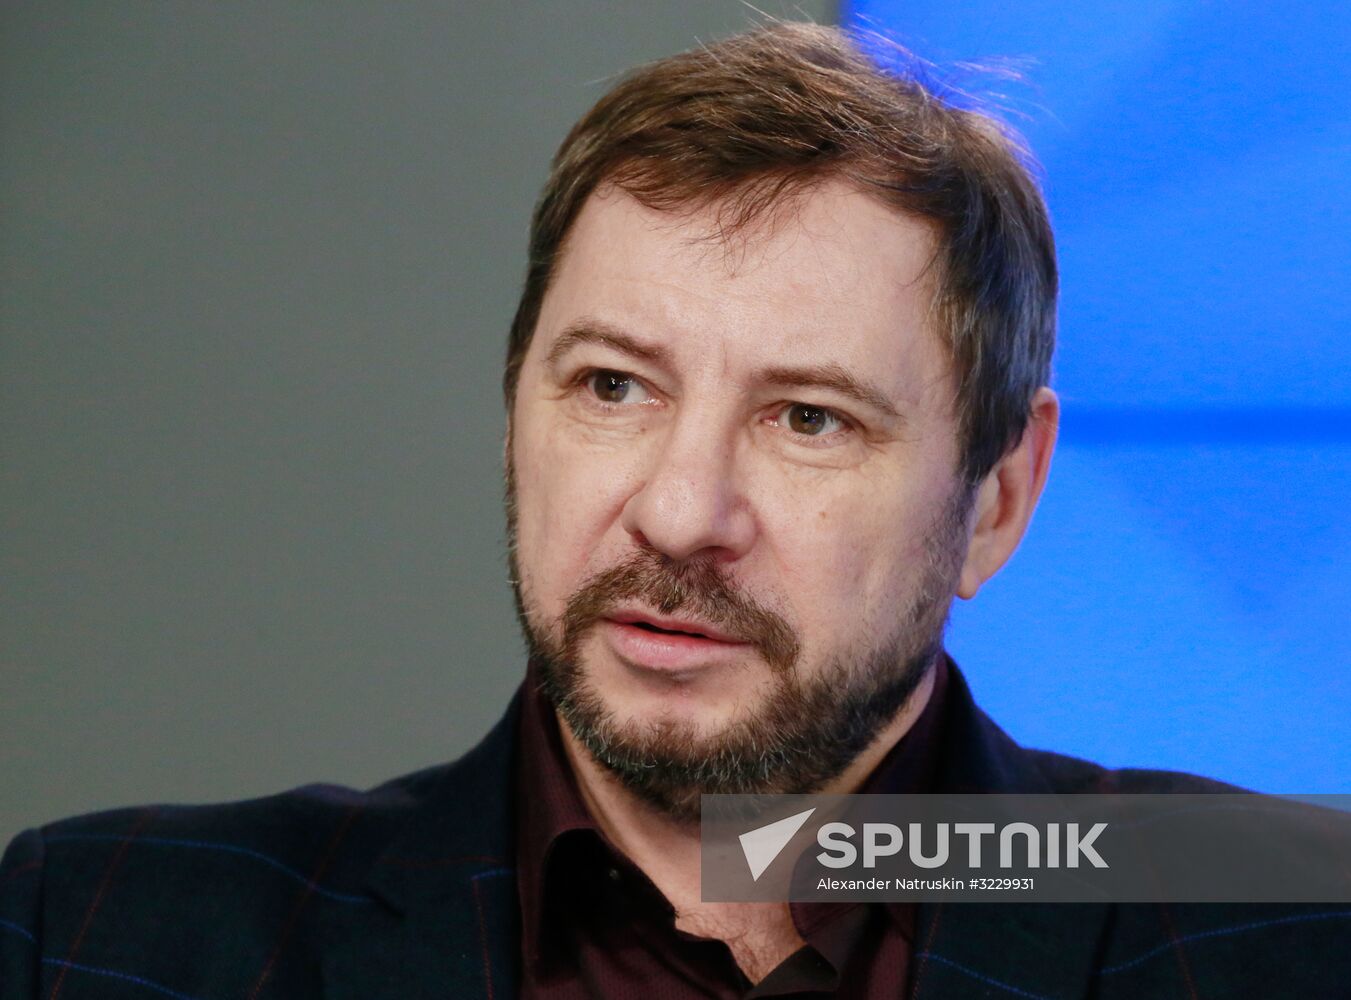 RIA Novosti journalist Zakhar Vinogradov